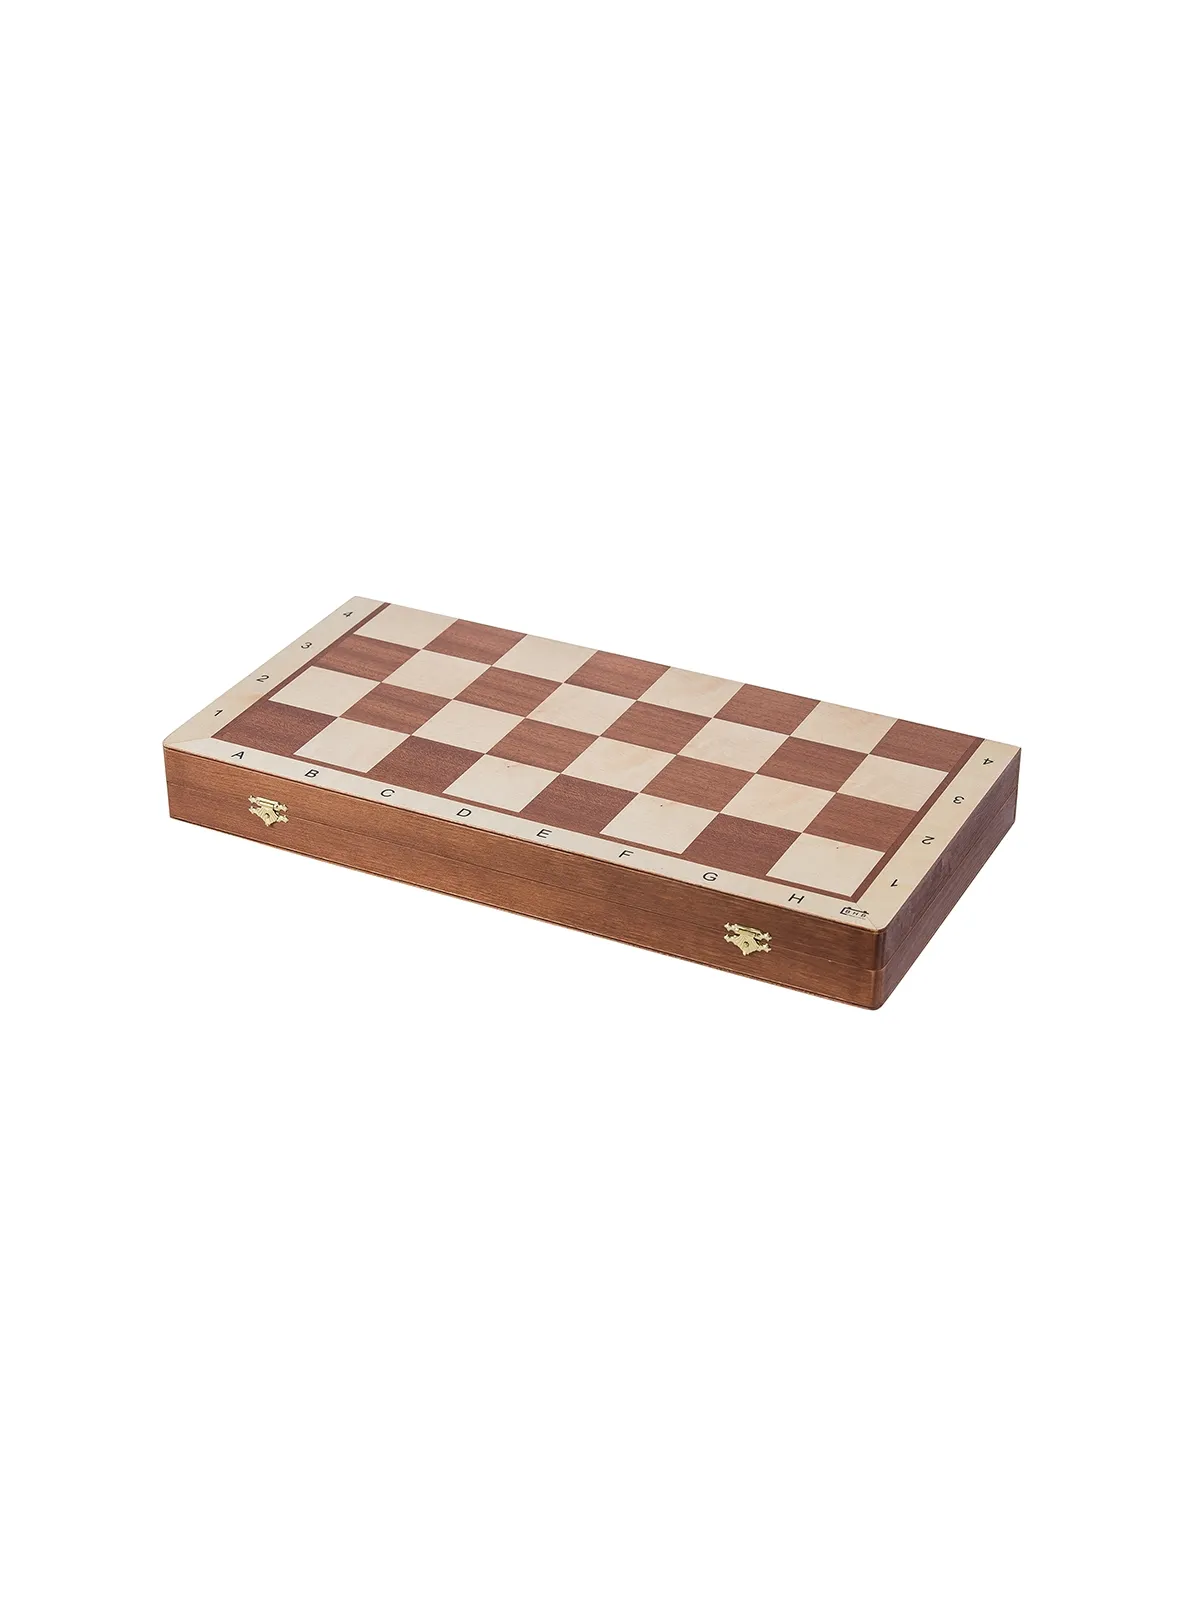 Schach Turnier Nr. 6 - Mahagoni BL